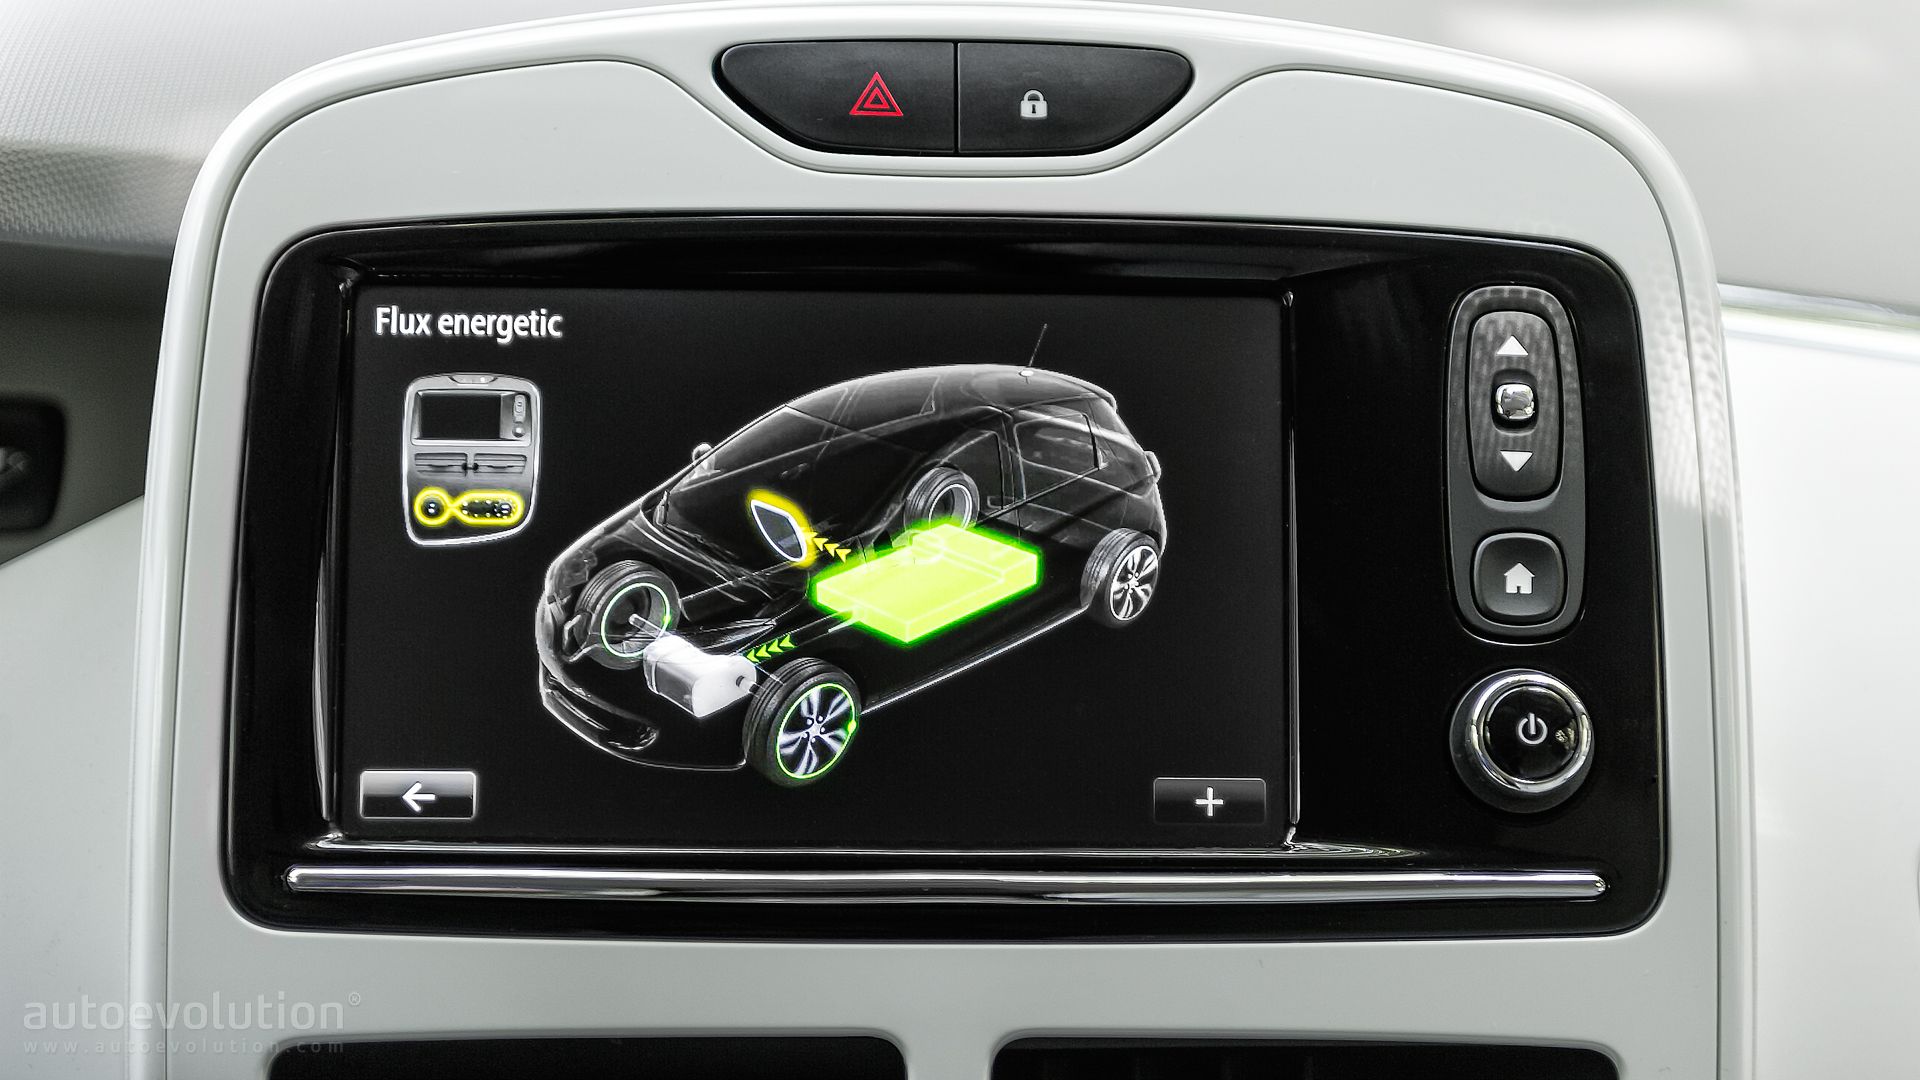 2015 Renault Zoe Review - autoevolution